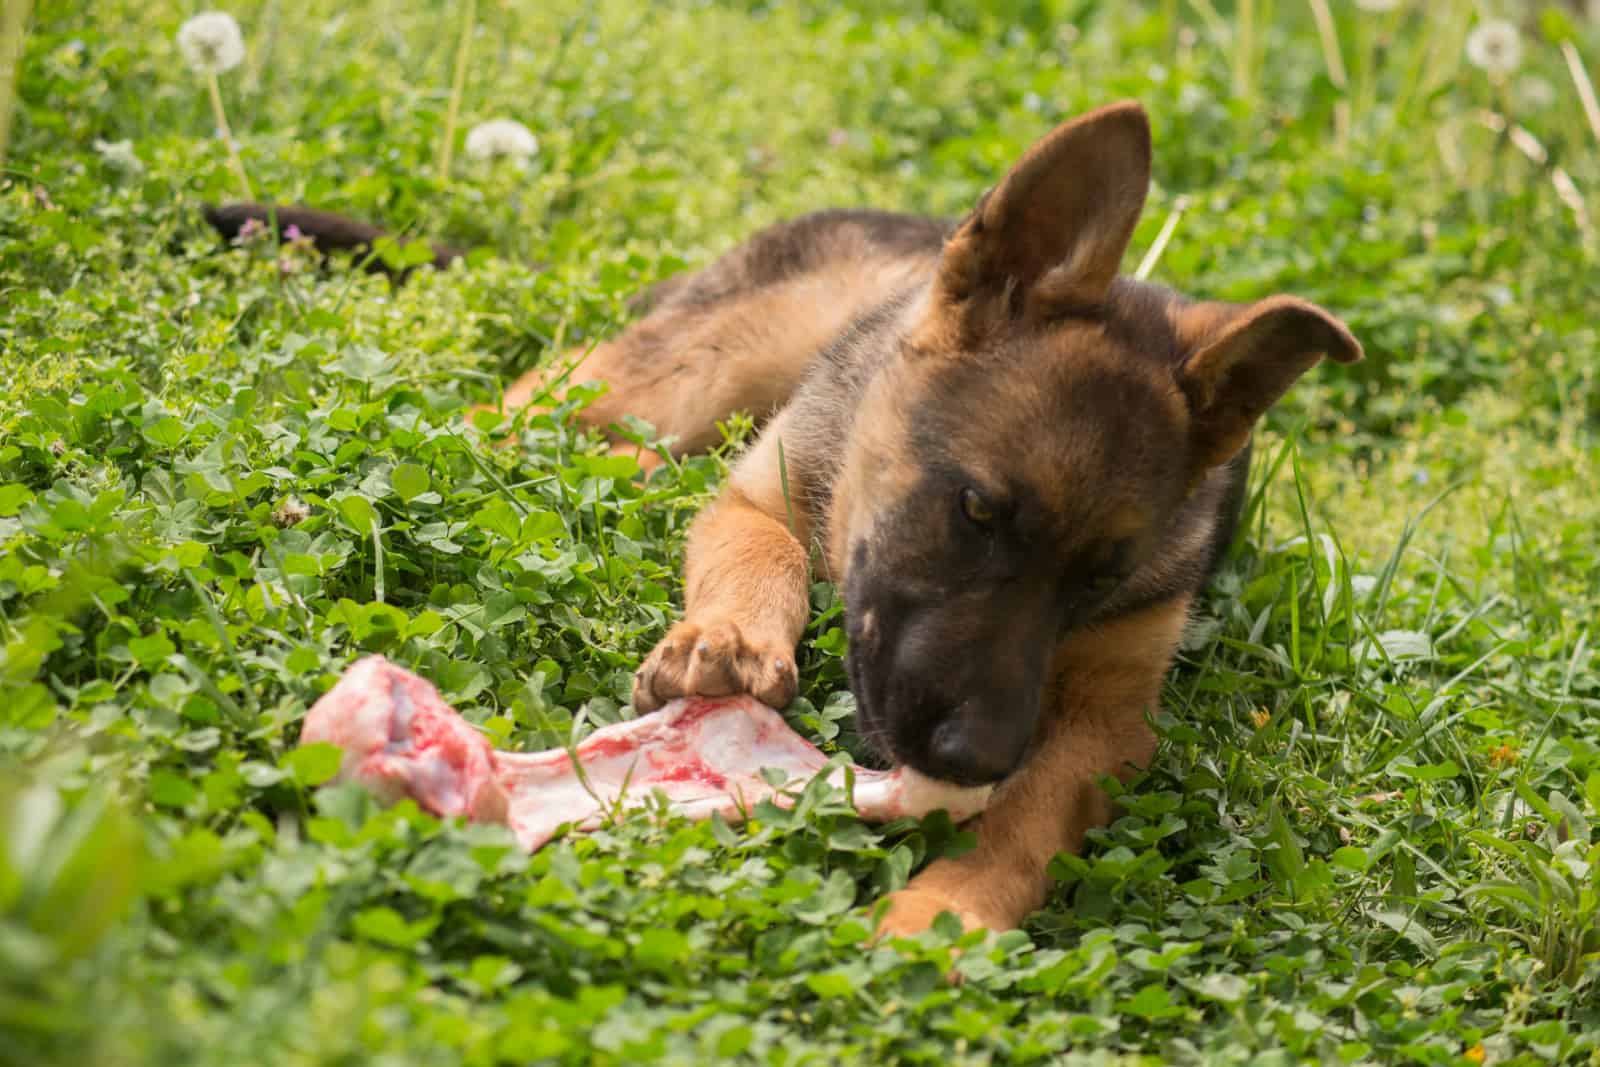 Puppy german shepherd dog eat, chew and nibble a raw bone